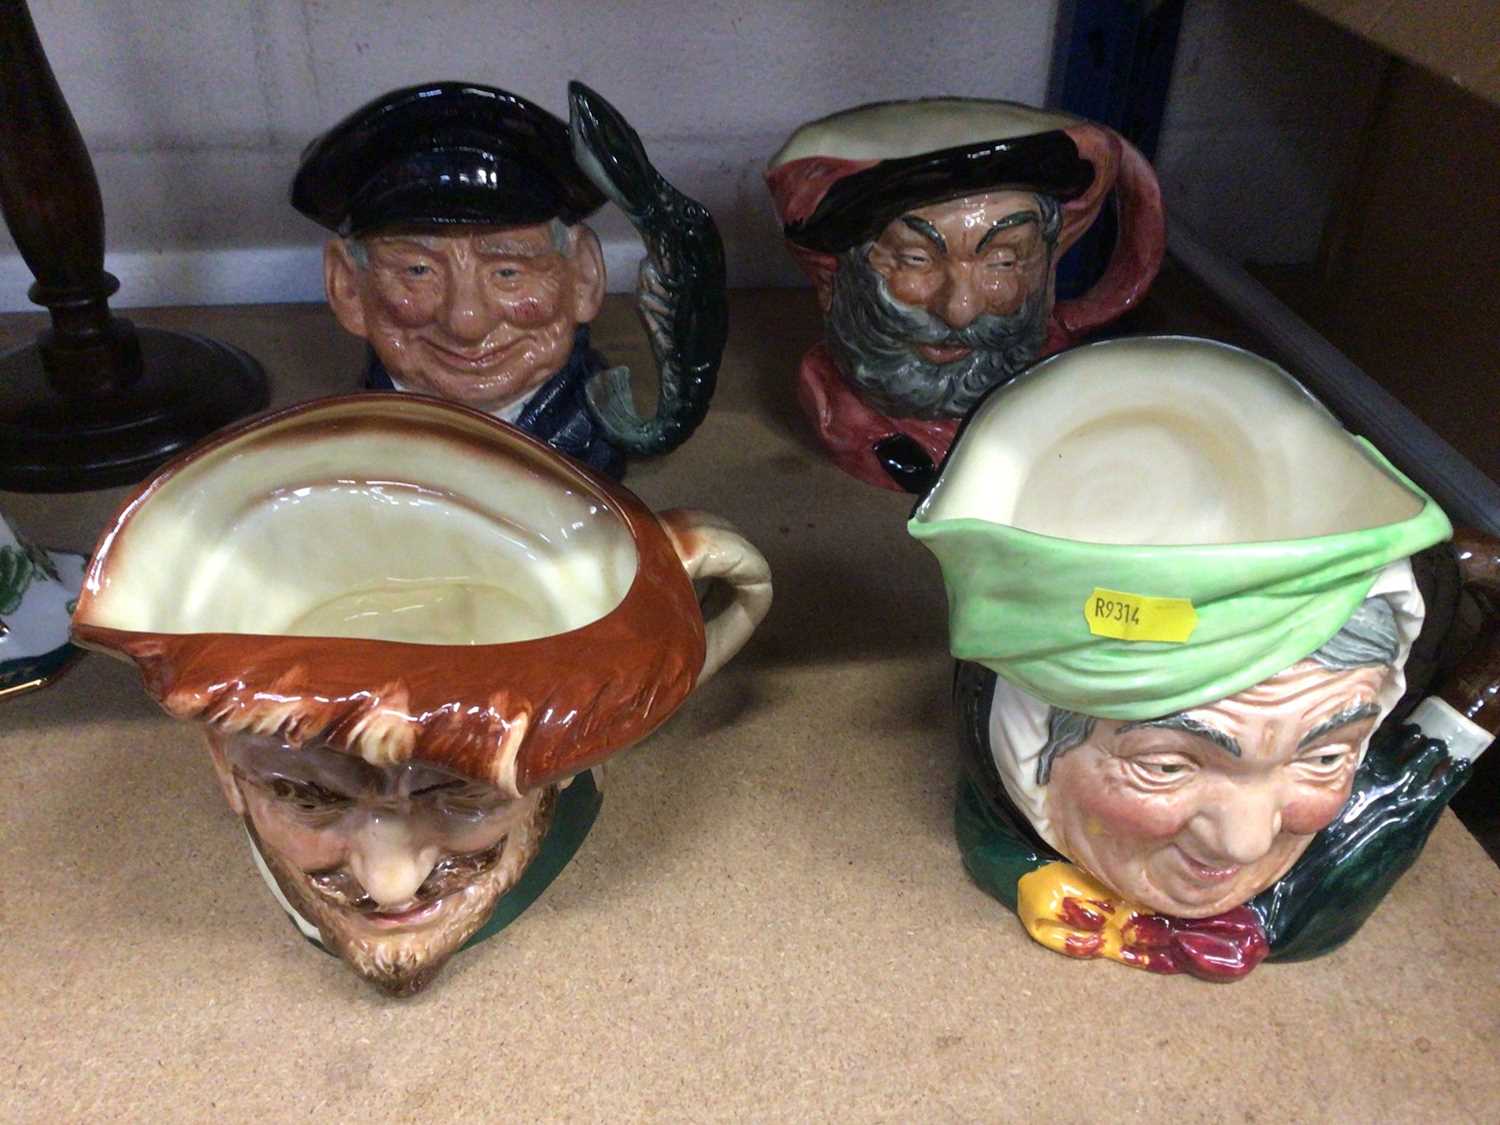 Lot 39 - Four Royal Doulton character jugs - Drake, Sarey Gamp, Falstaff and Lobster Man